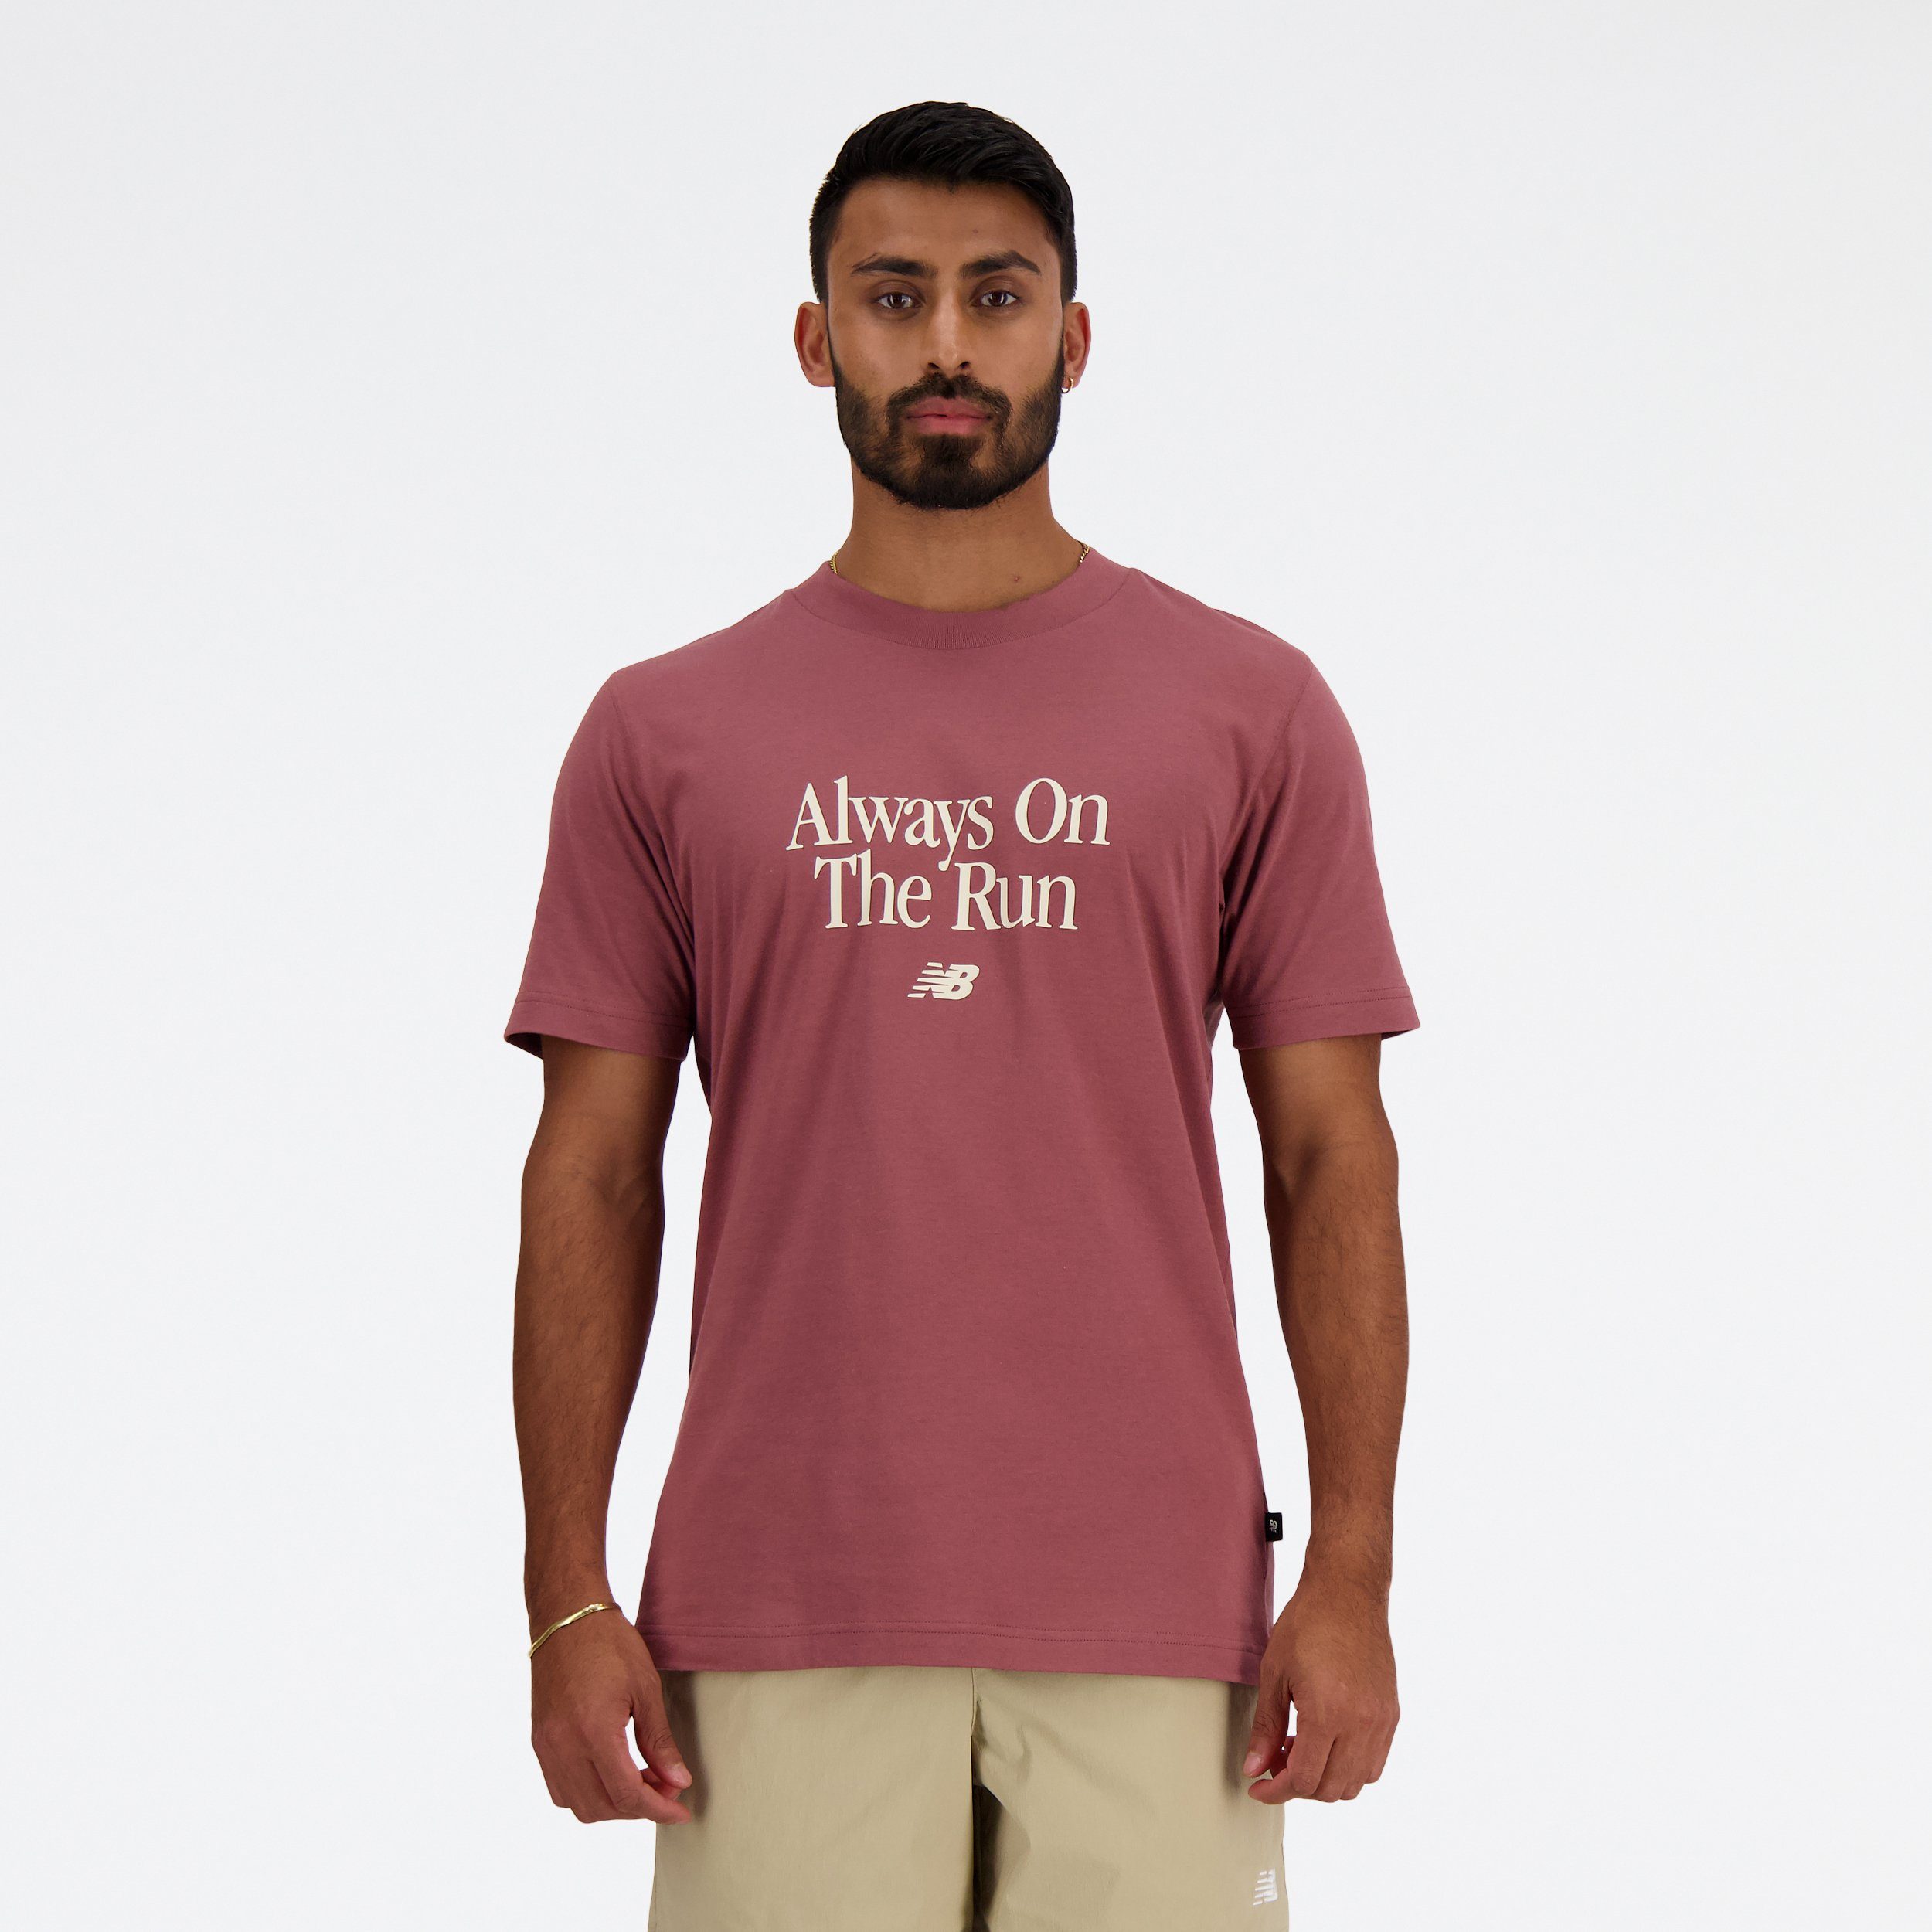 New Balance T-shirt S LIFESTYLE T-SHIRT